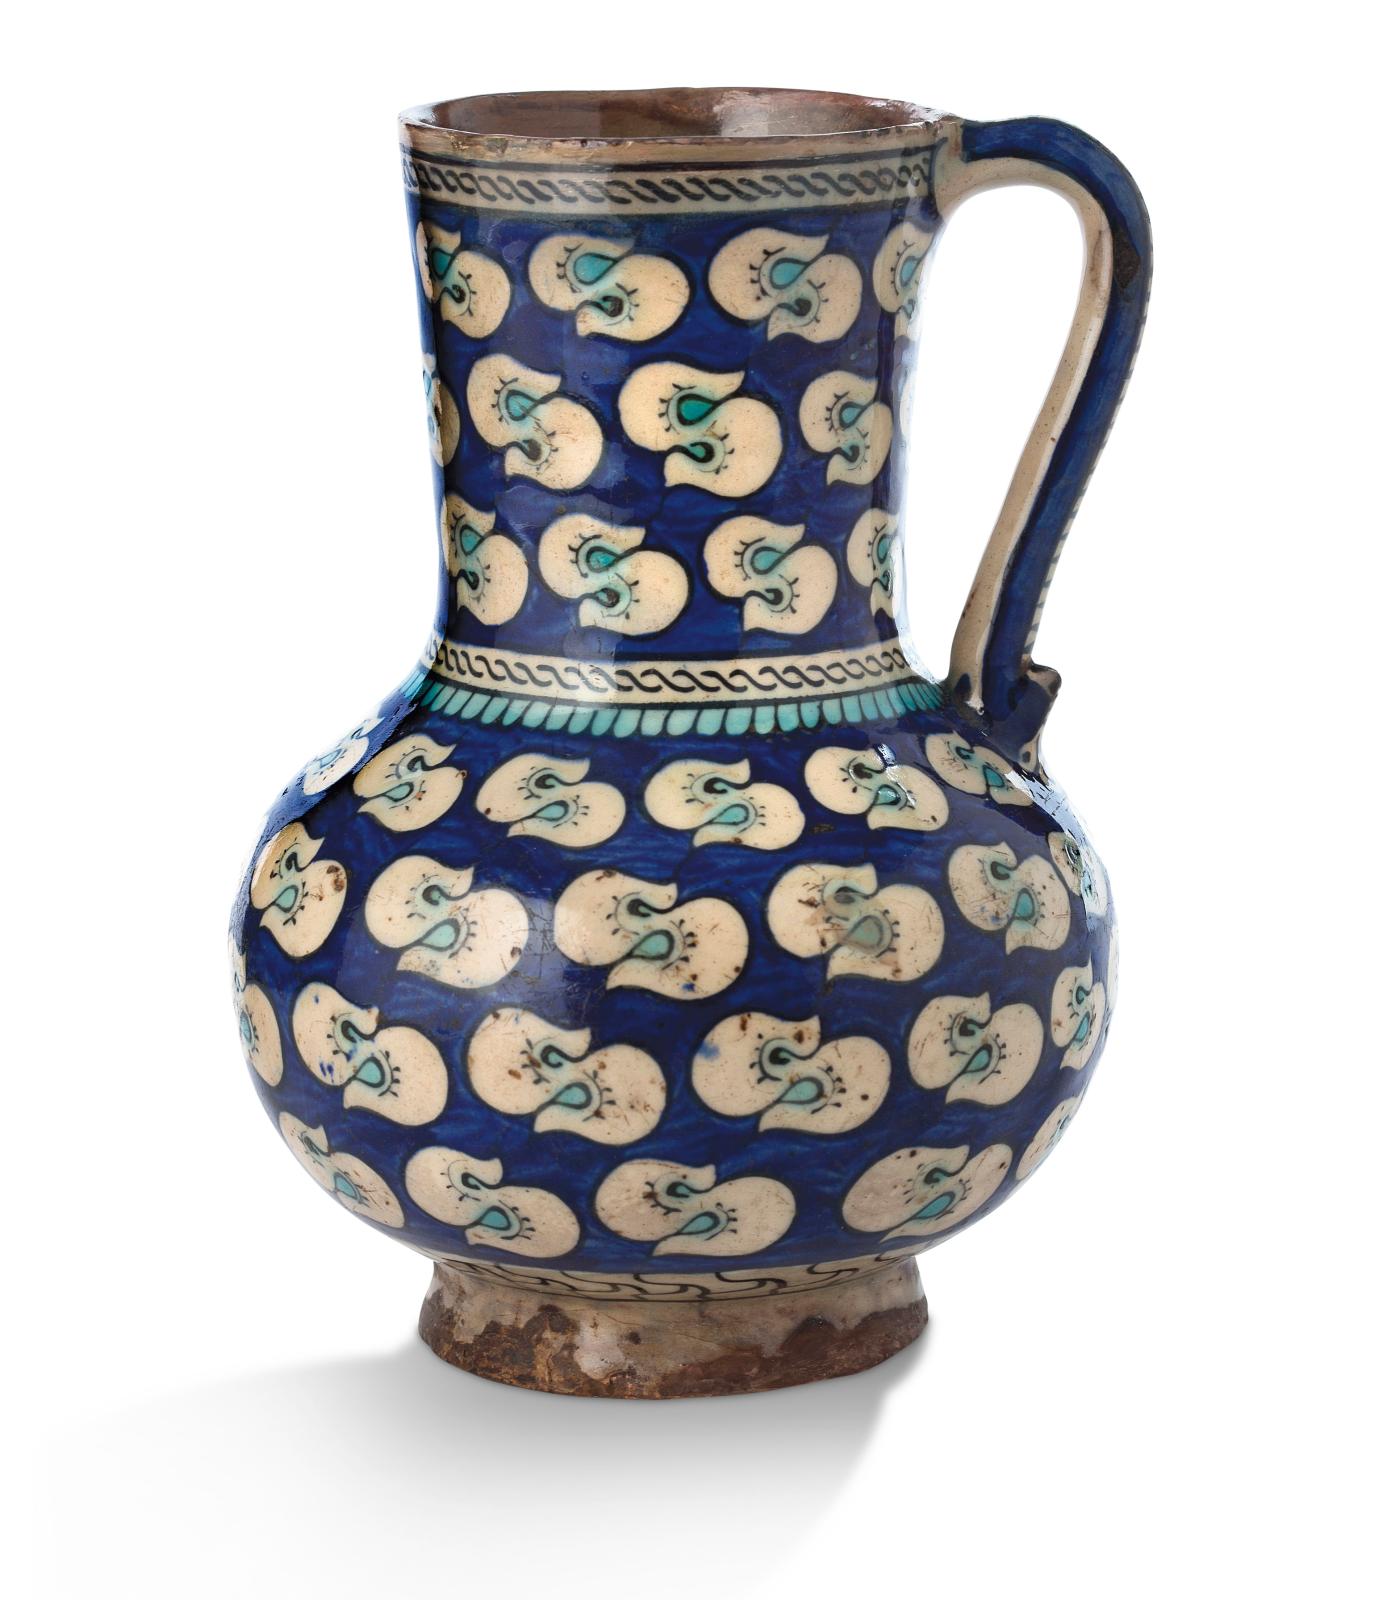 Iznik, Ottoman Turkey, c. 1550, siliceous ceramic pyriform "bardak" pitcher with polychrome painted decoration under colorless glaze, "çin